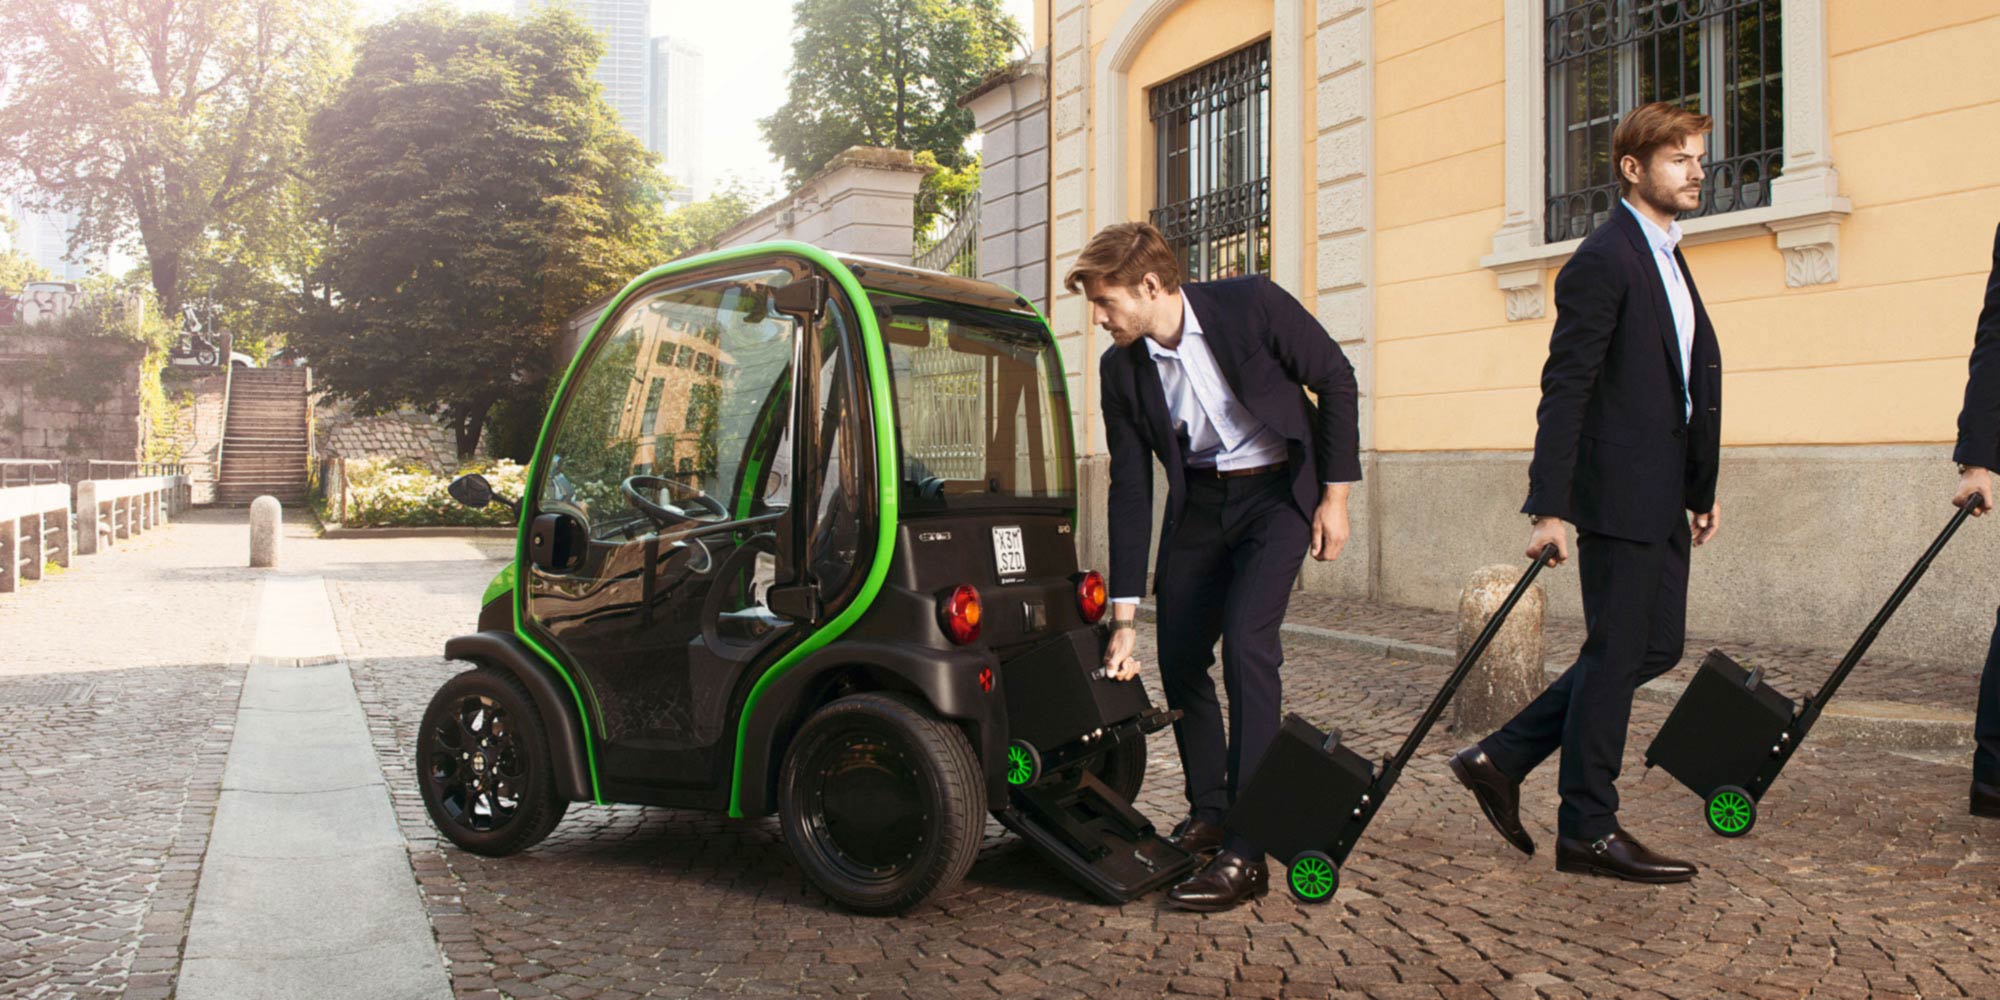 Estrima Birò Italian Solution to Electric Vehicle Range Anxiety, and